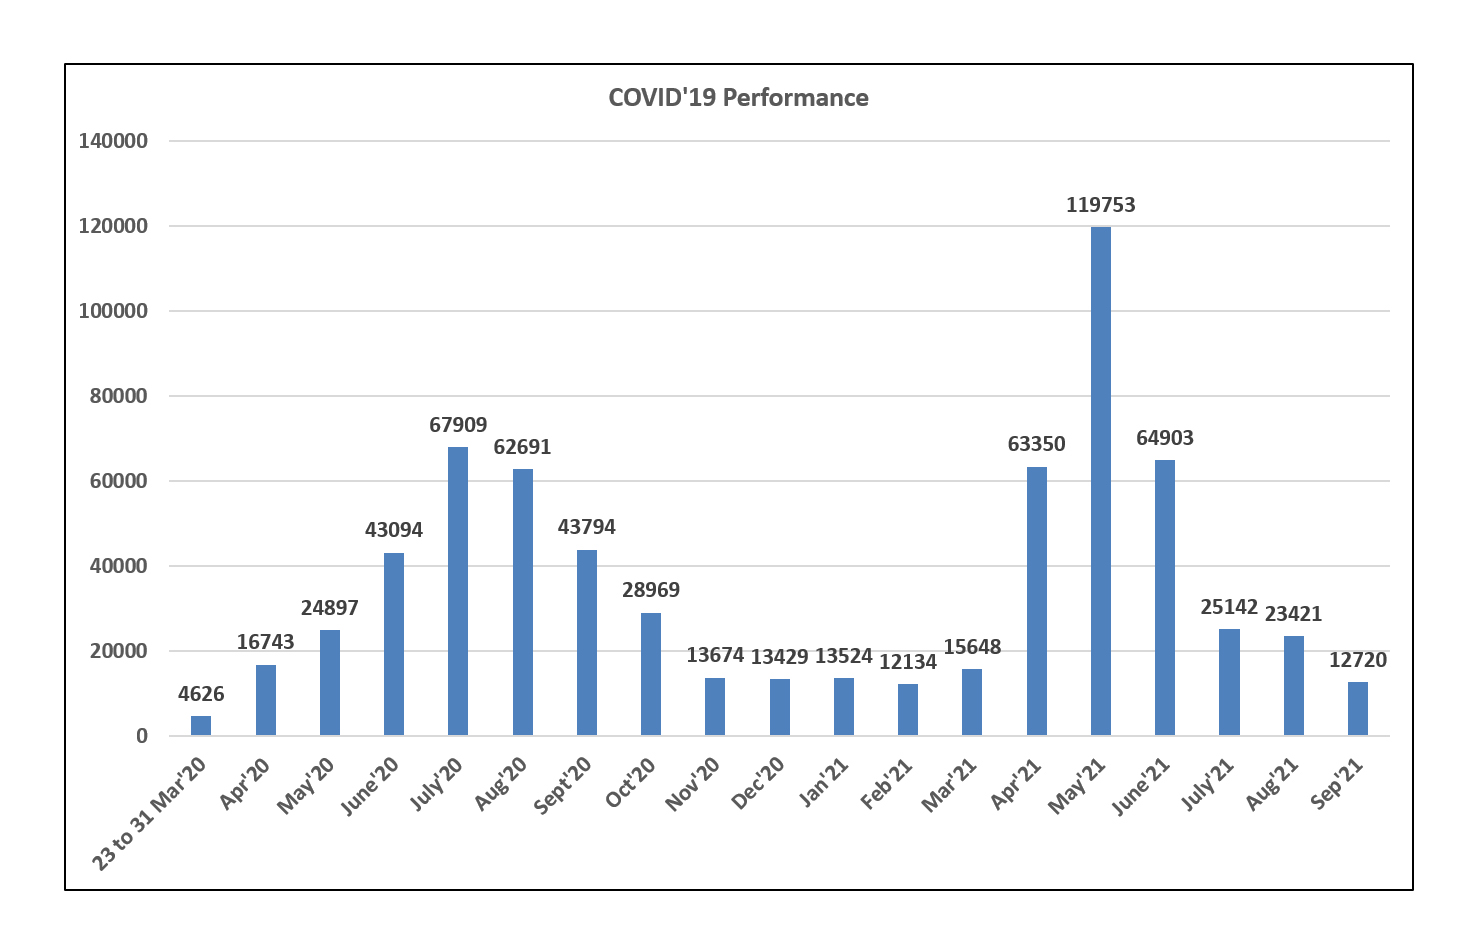 Covid-19 Performance